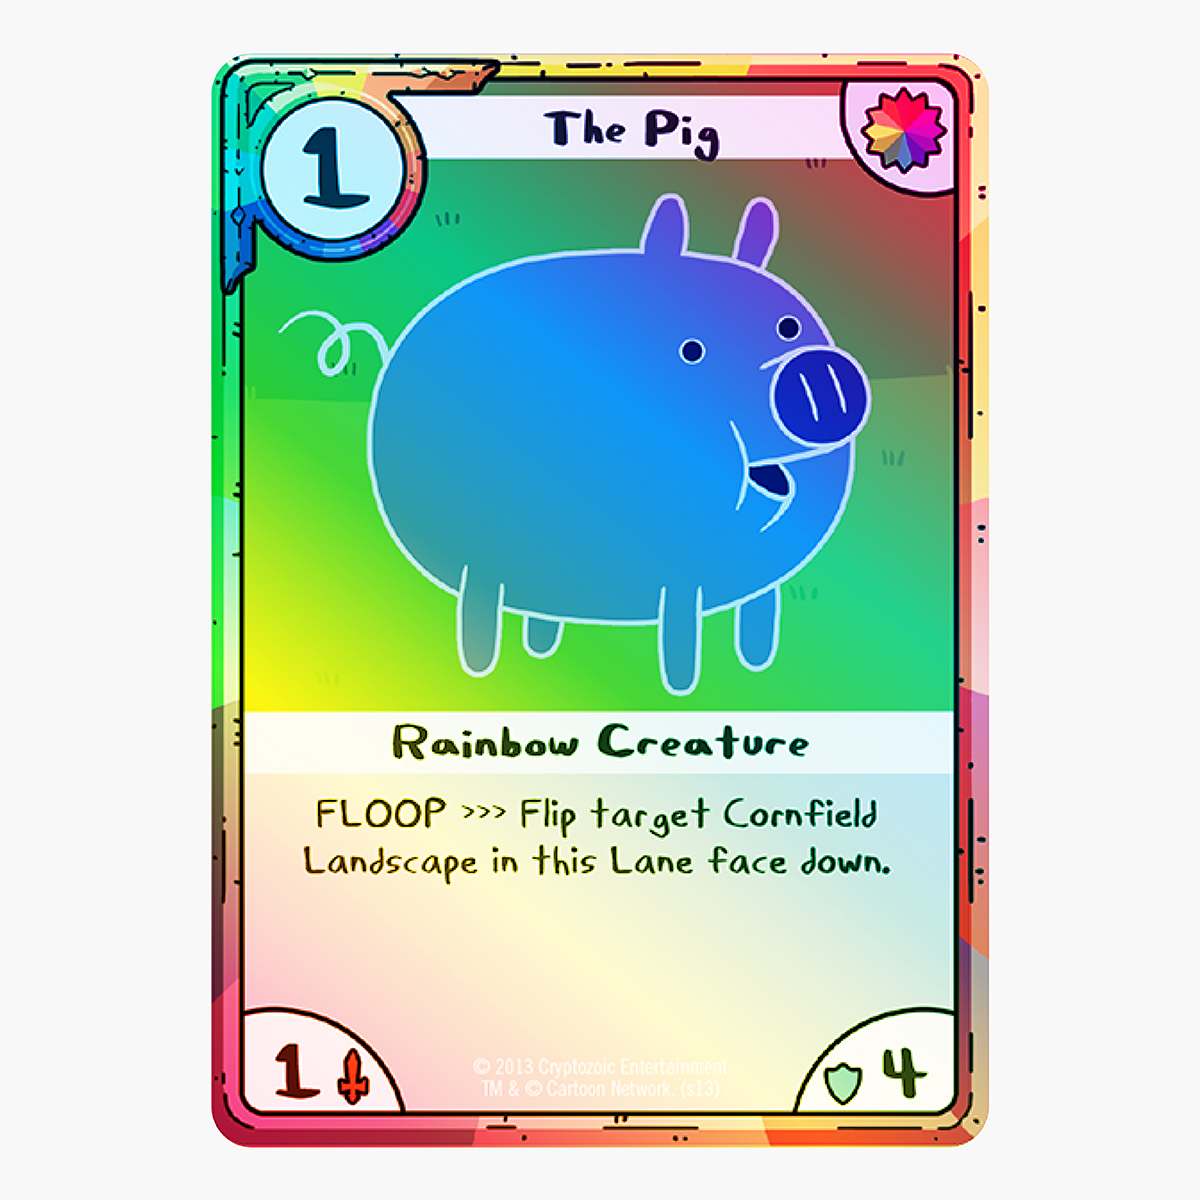 Card Wars, Adventure Time Wiki